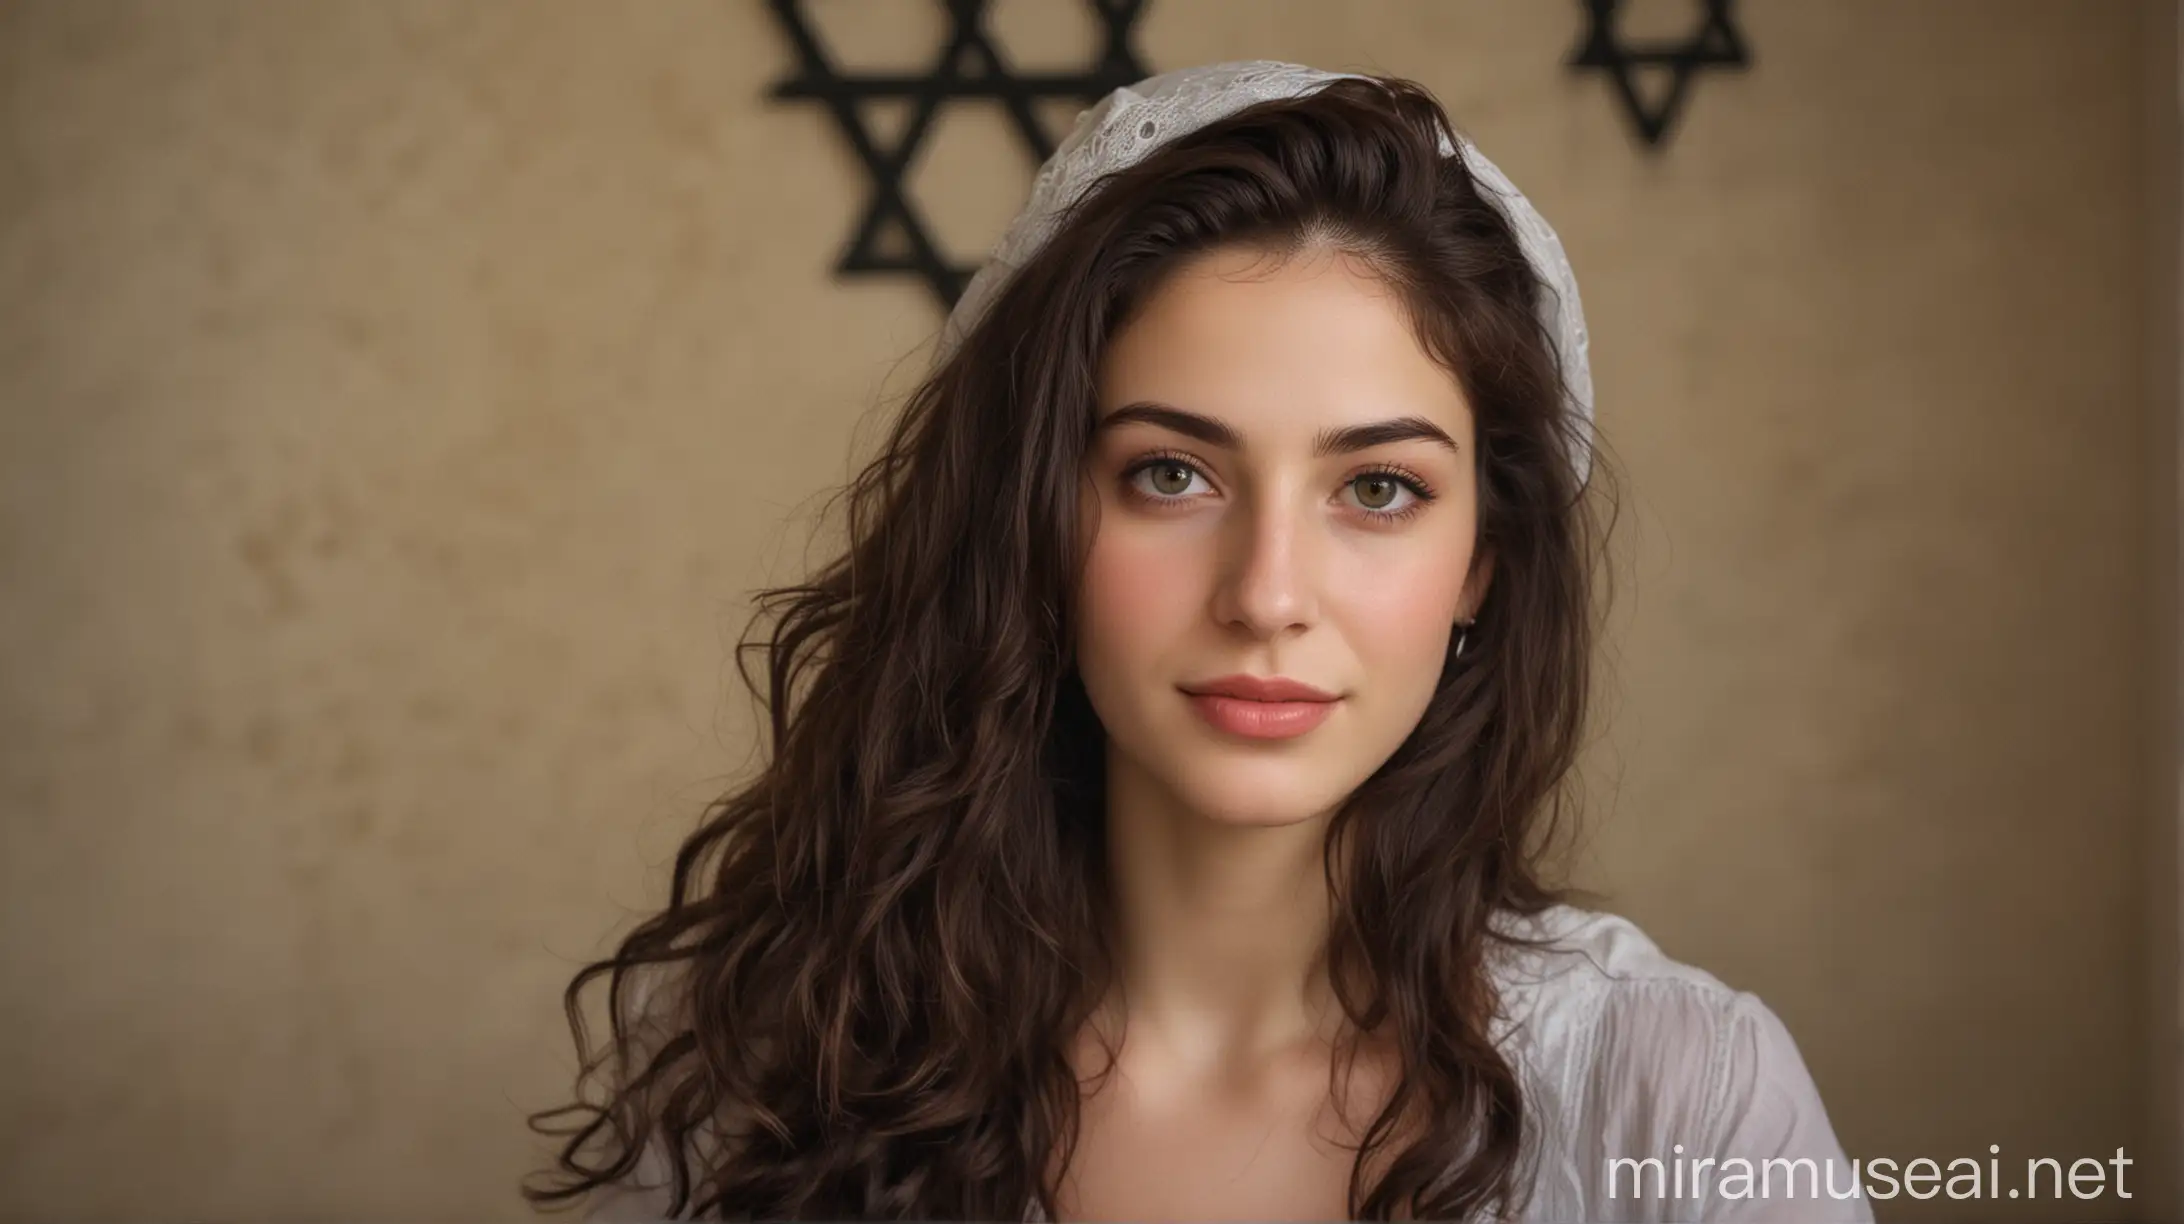 Beautiful Jewish Woman in Traditional Dress with Prayer Shawl